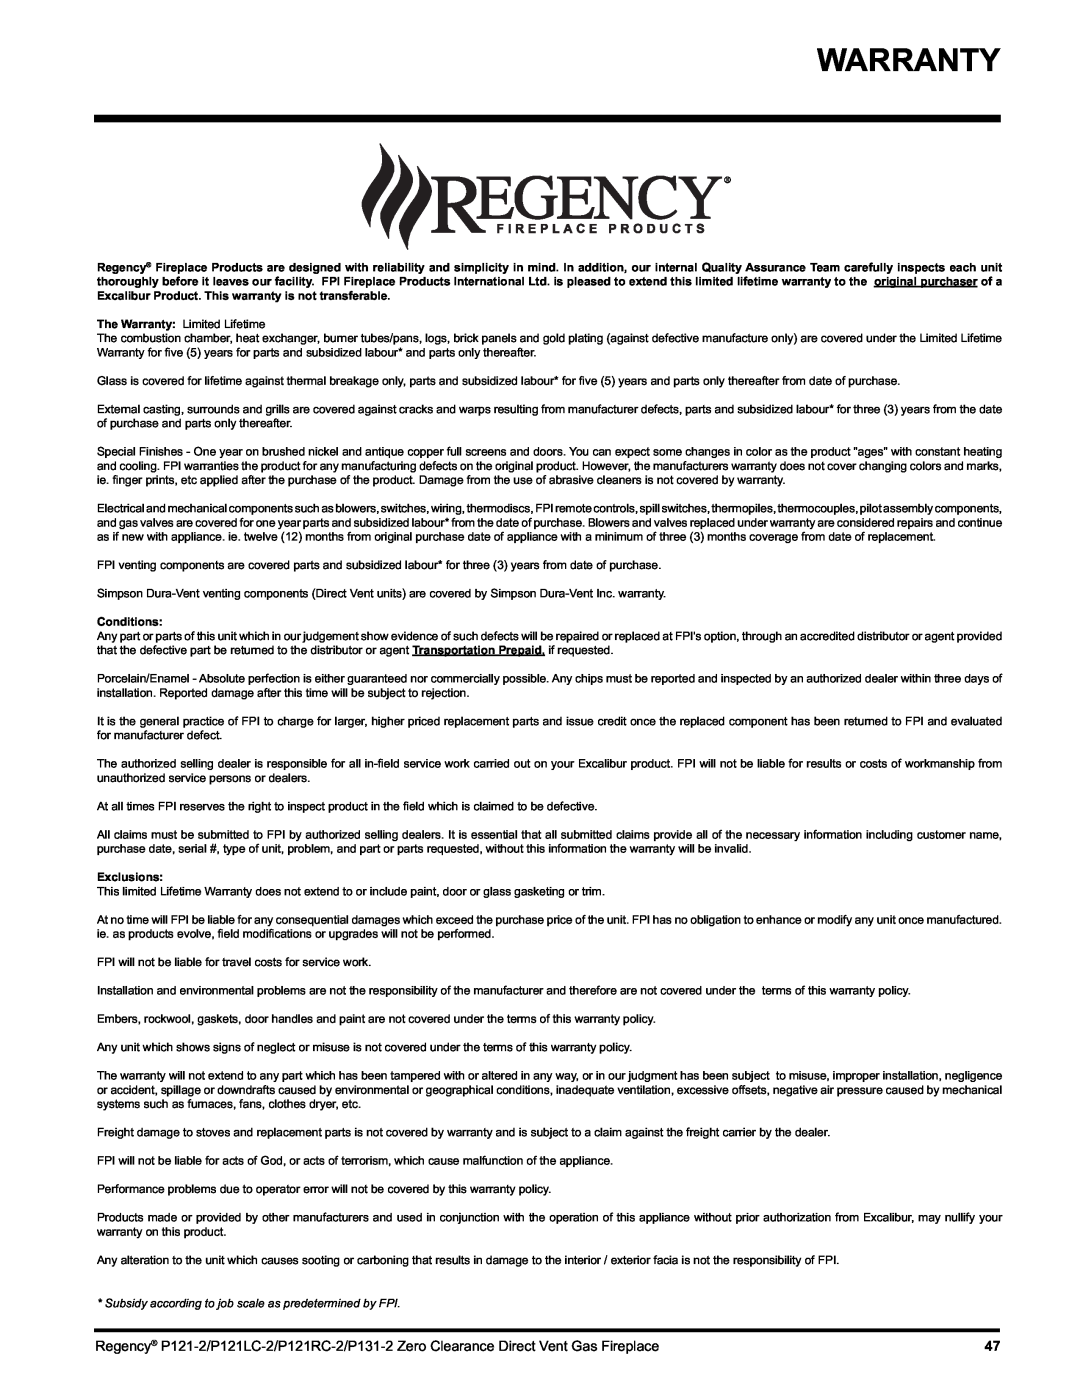 Regency P131, P121RC, P121LC installation manual Warranty, Conditions, Exclusions 